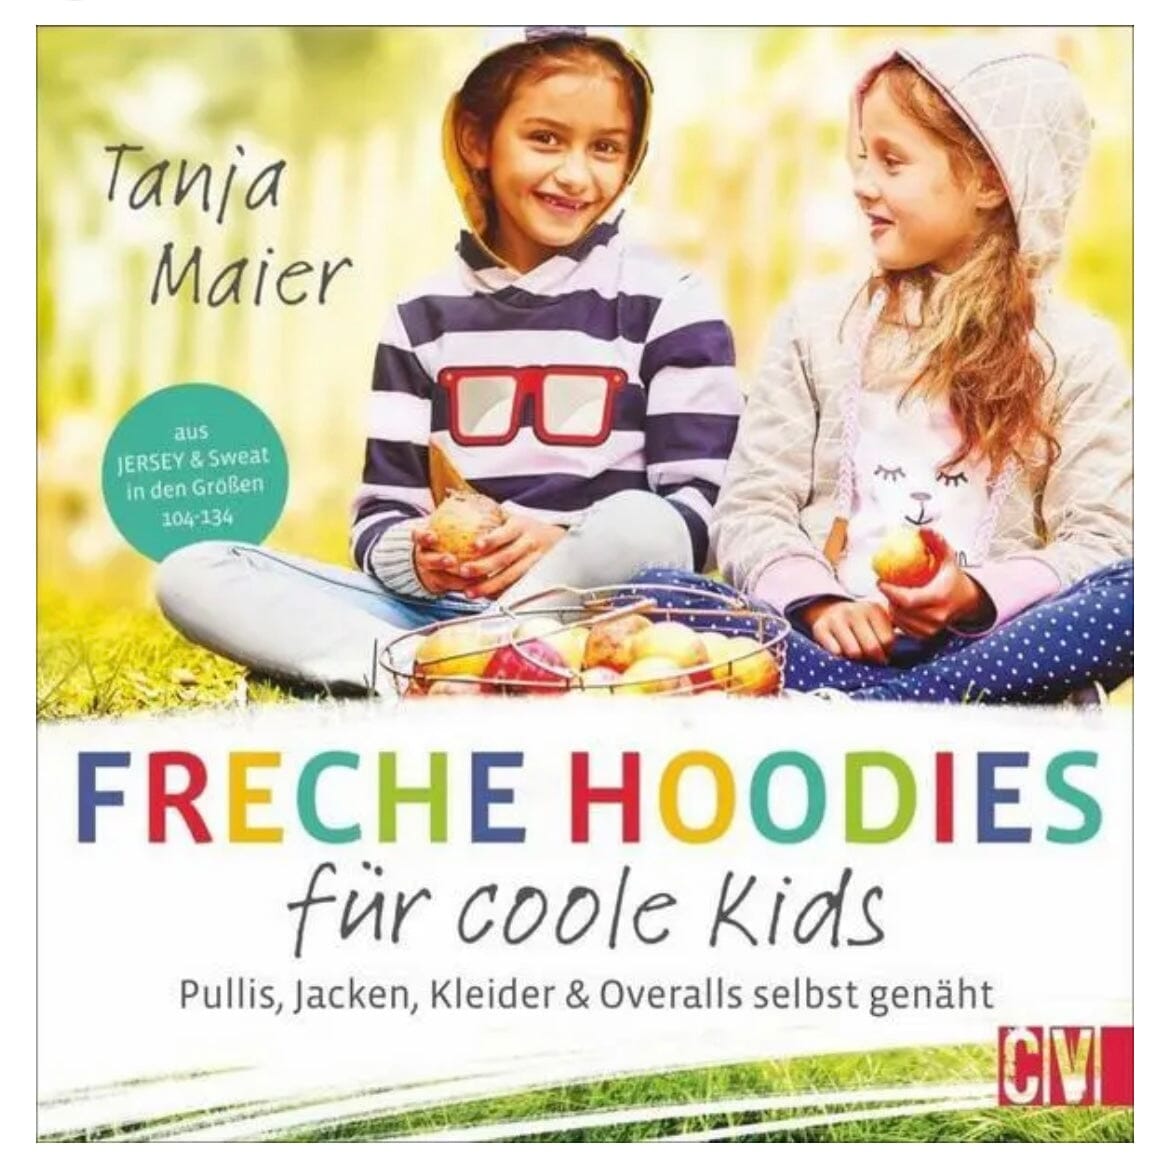 Freche Hoodies für coole Kids - selbst genäht in Gr. 104-134 aus Jersey&Sweat Stück poshpinks